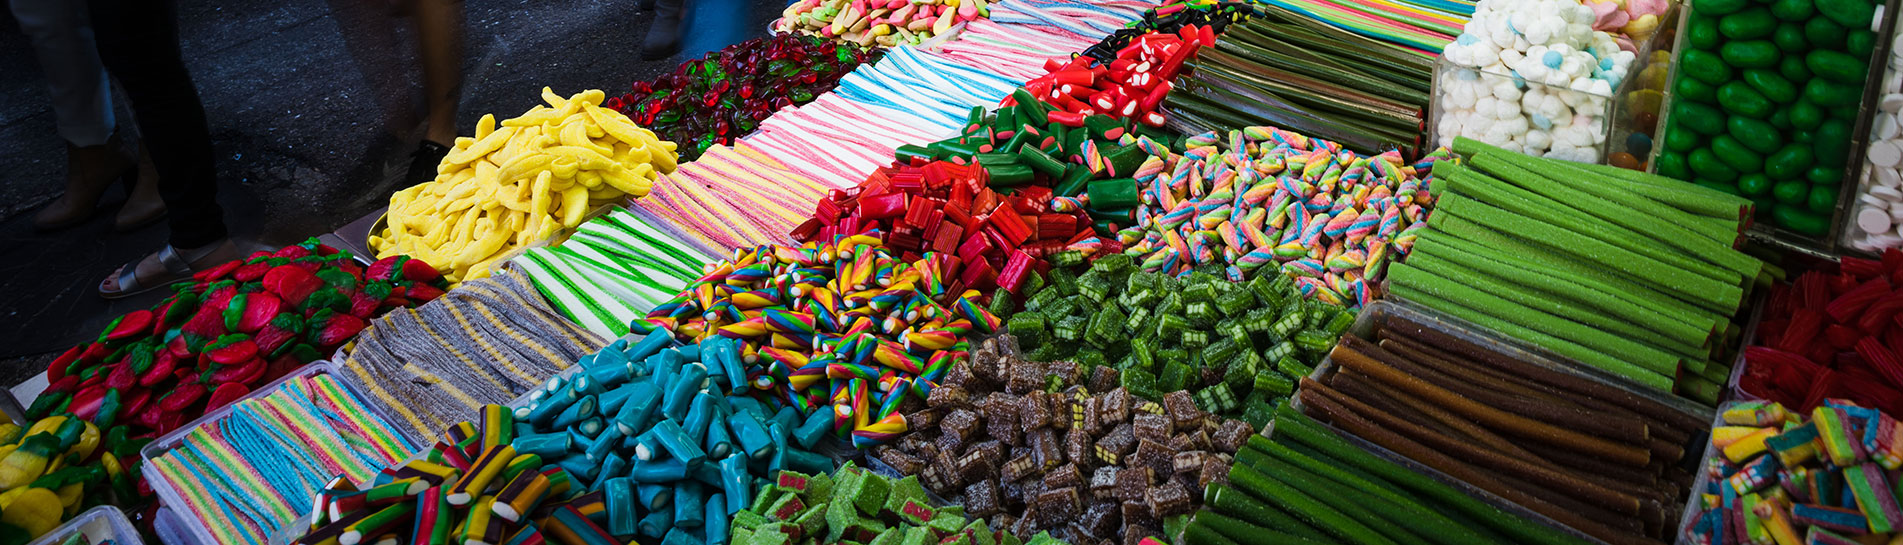 Freshness and flavors: Tel Aviv Markets